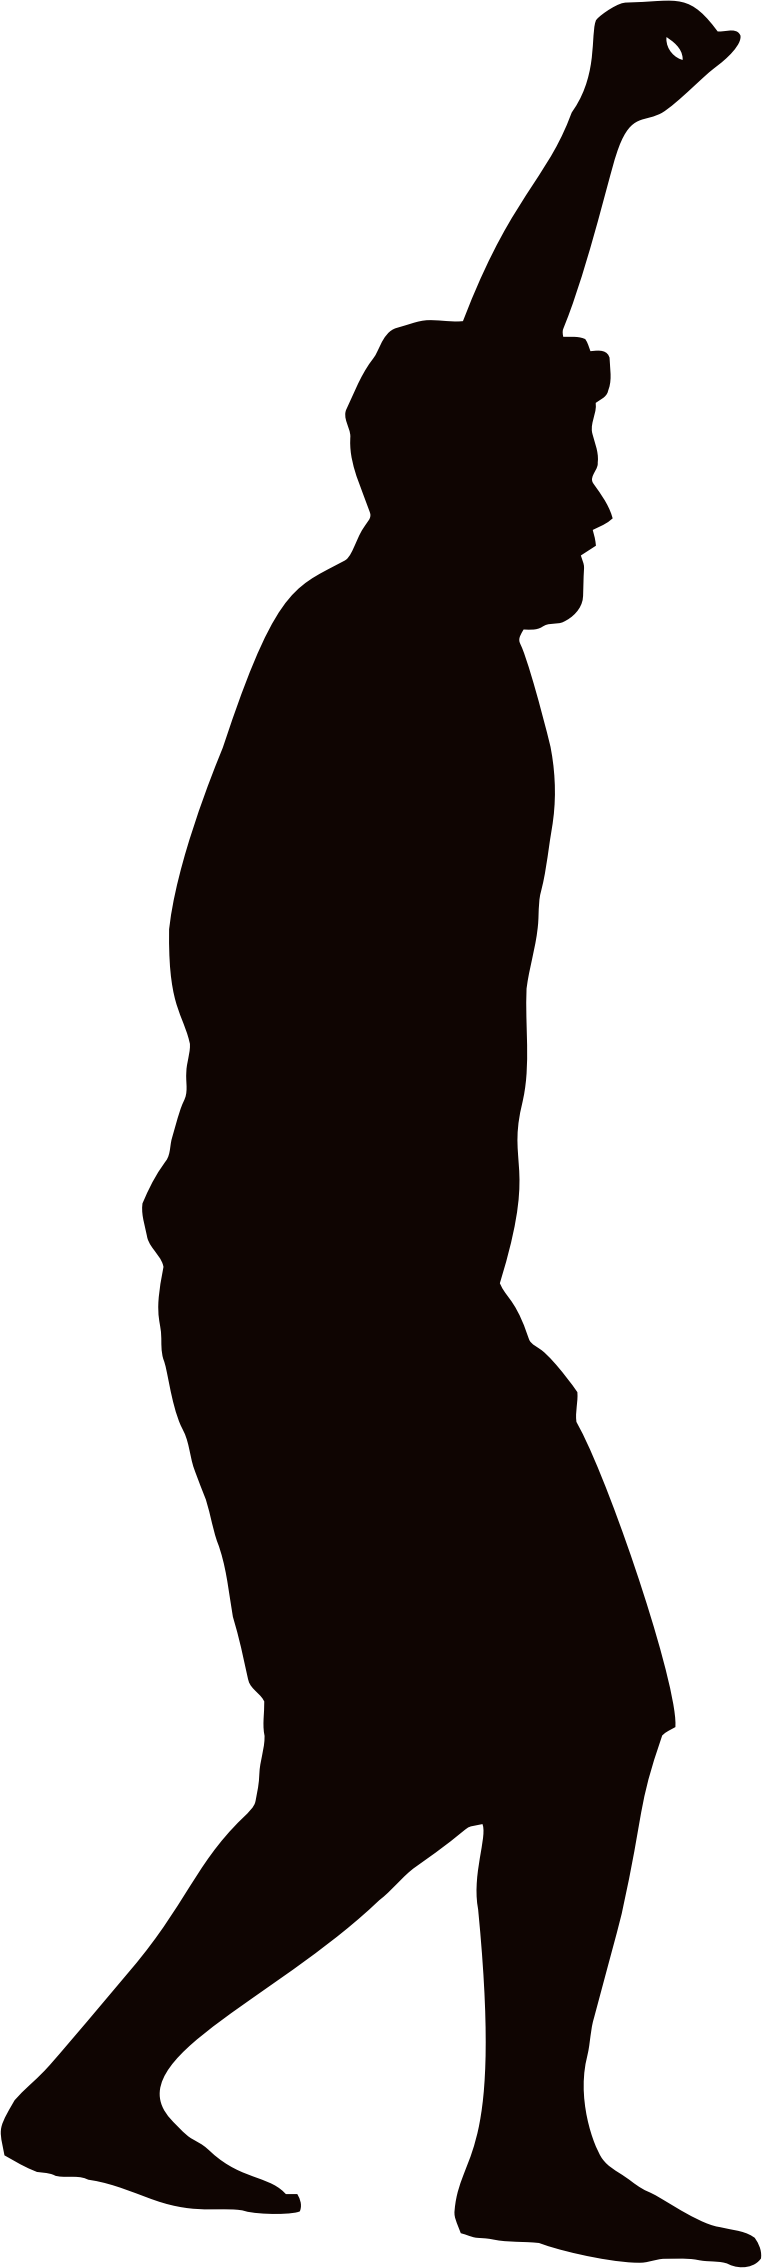 Tightrope Walker Silhouette - Tight Rope Walker Silhouette (762x2268)